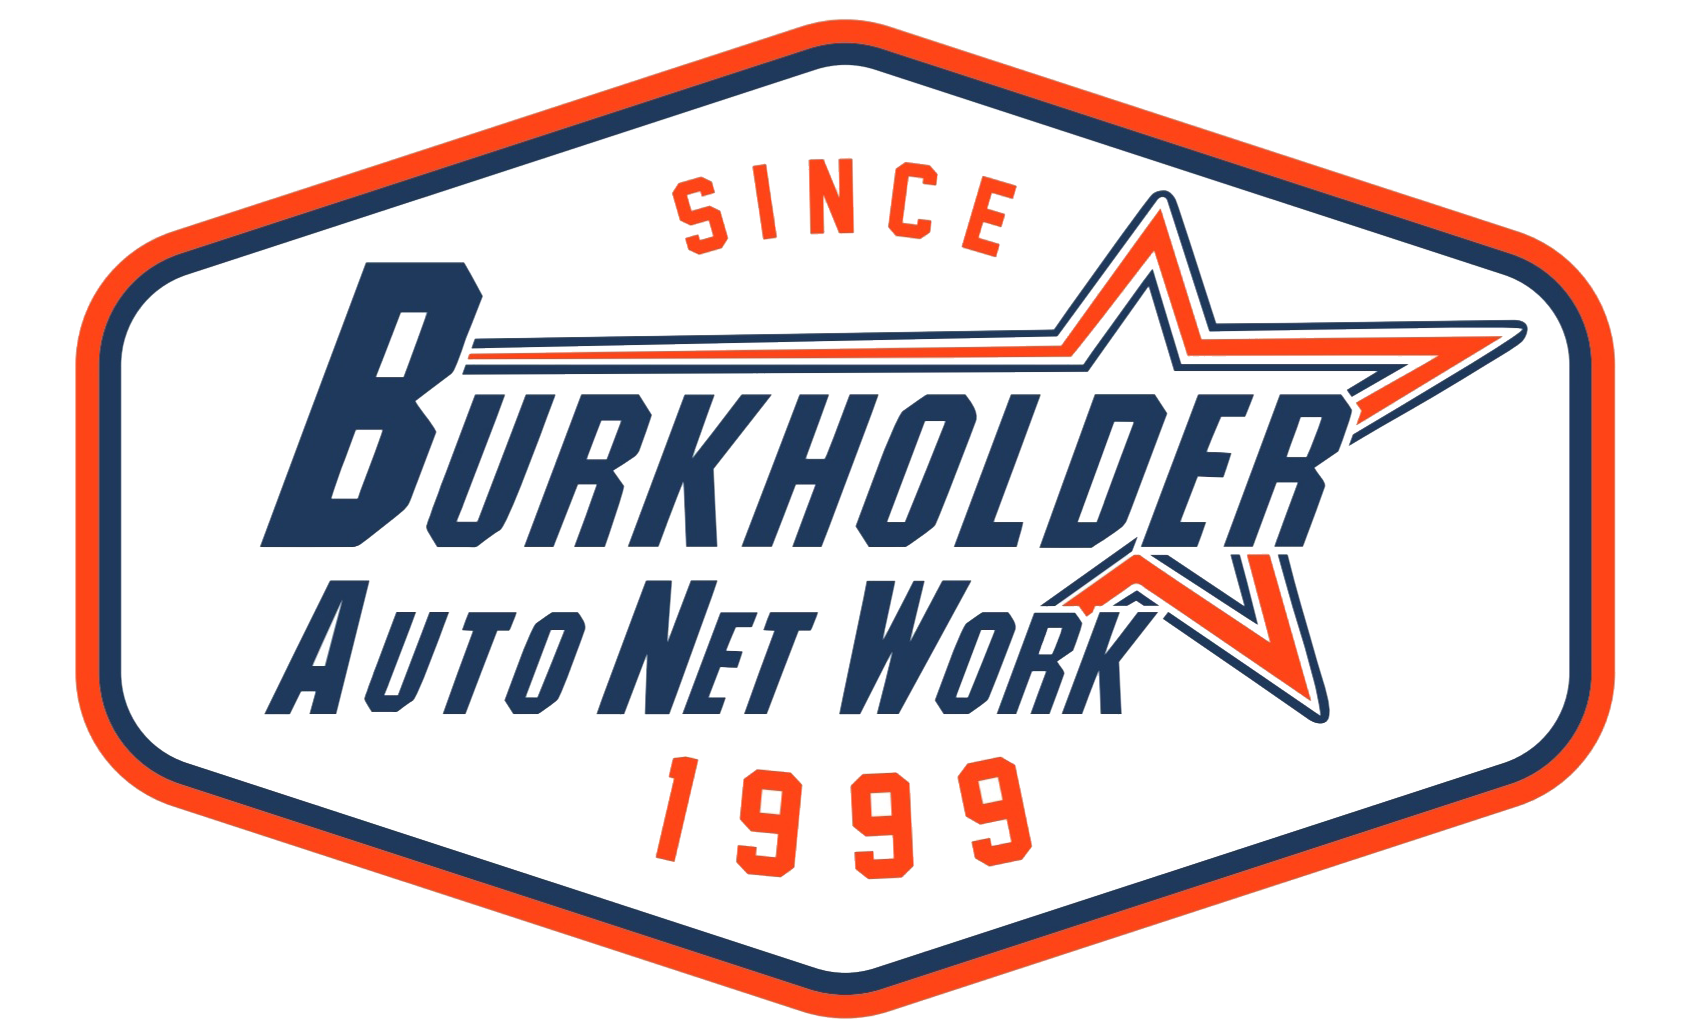 Burkholder Auto Network star logo